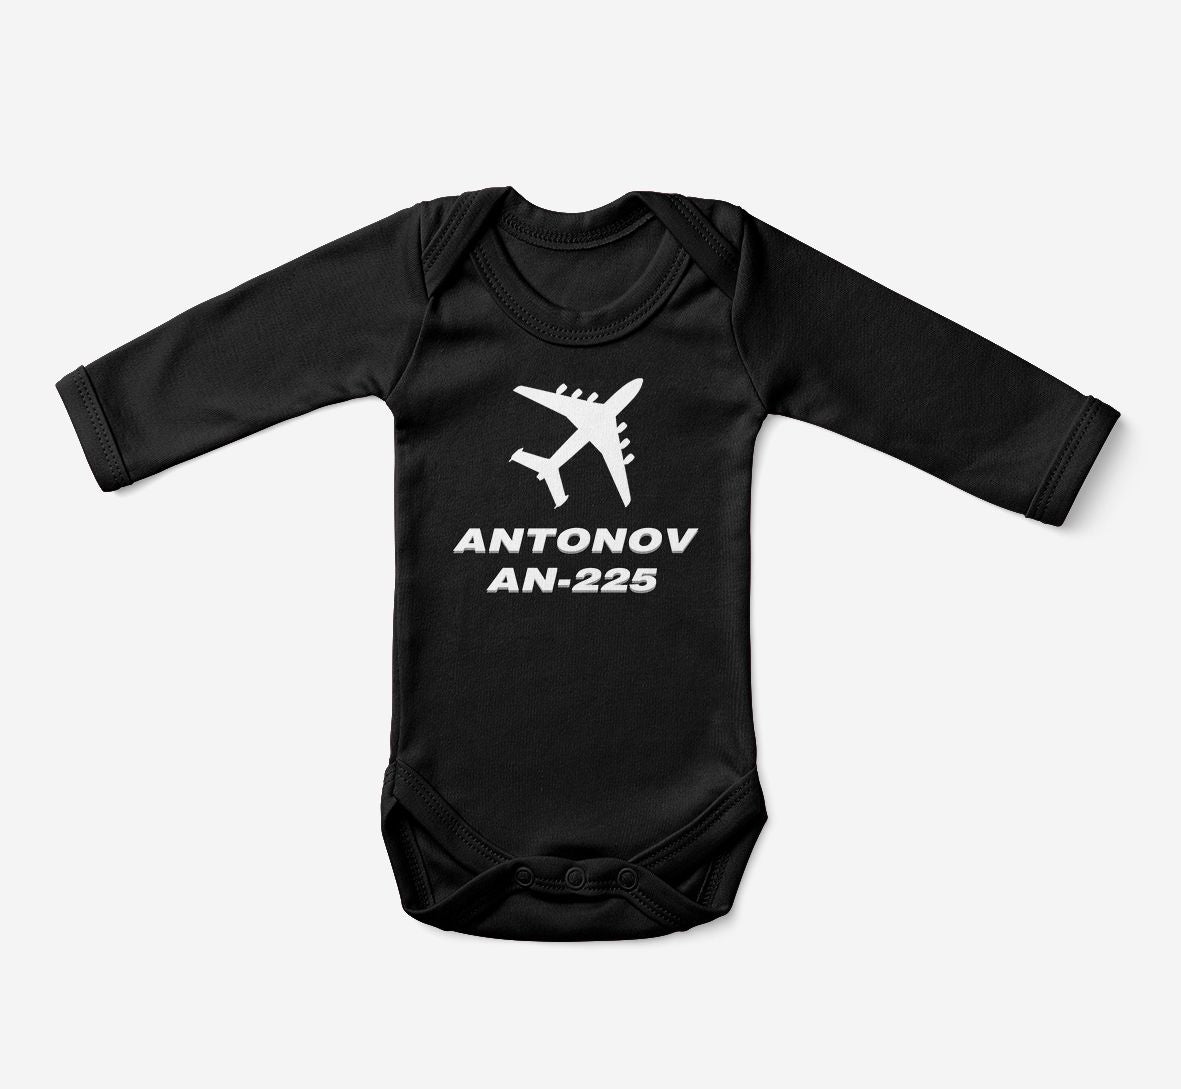 Antonov AN-225 (28) Designed Baby Bodysuits